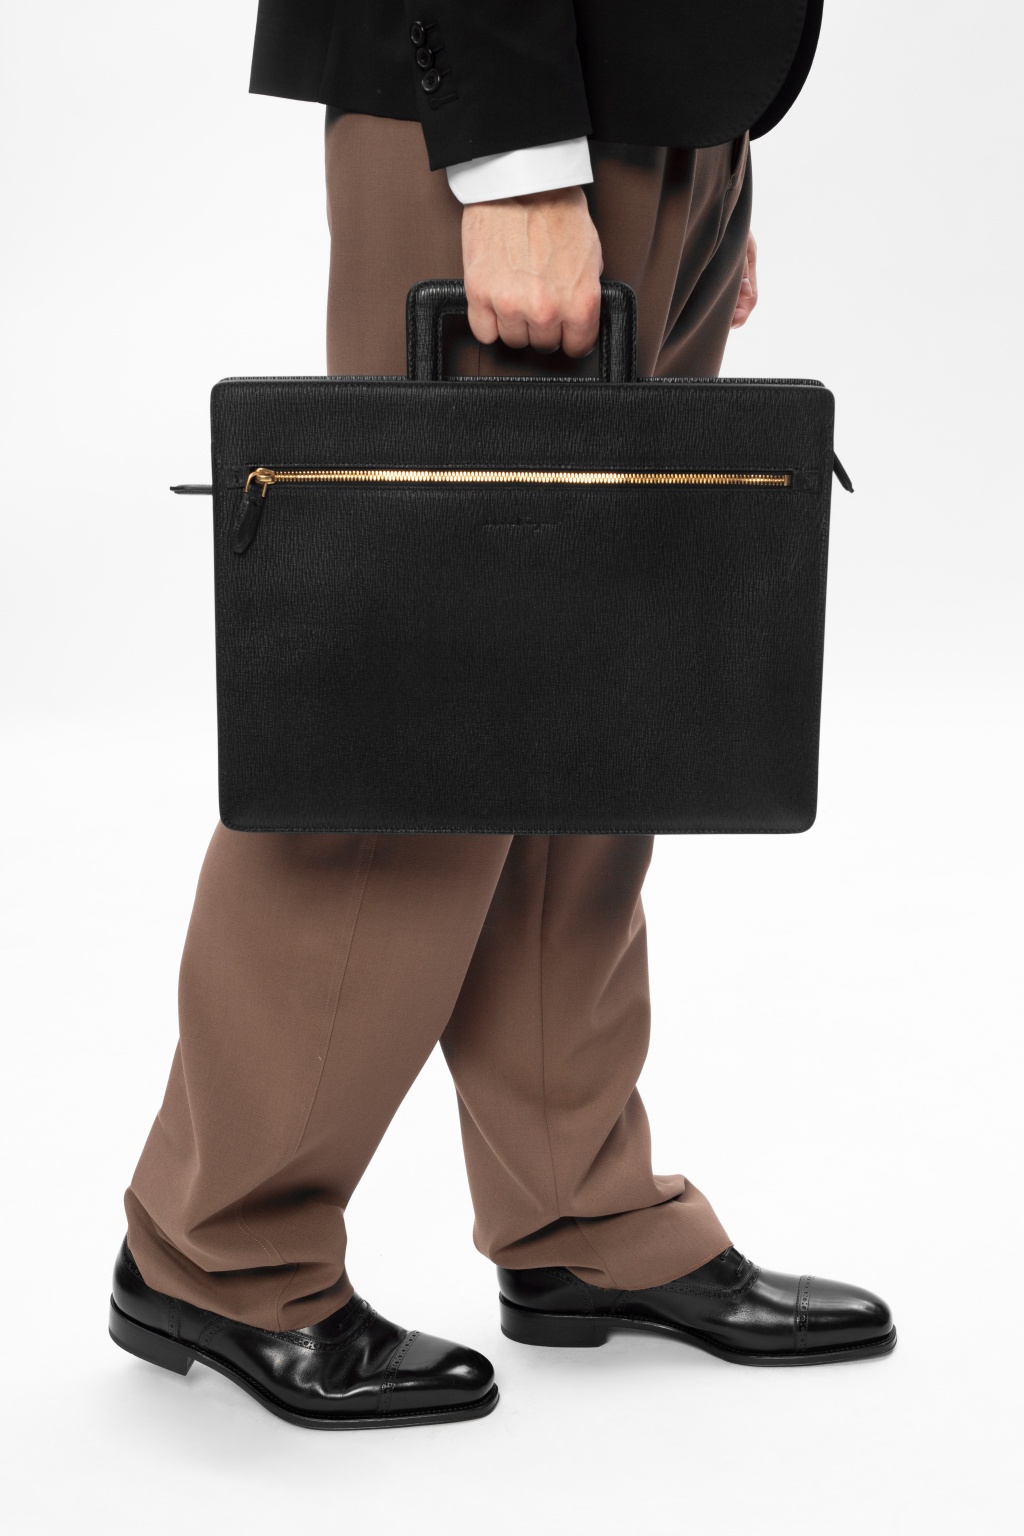 Ferragamo Gancio Monogram Embossed Calfskin Leather Briefcase